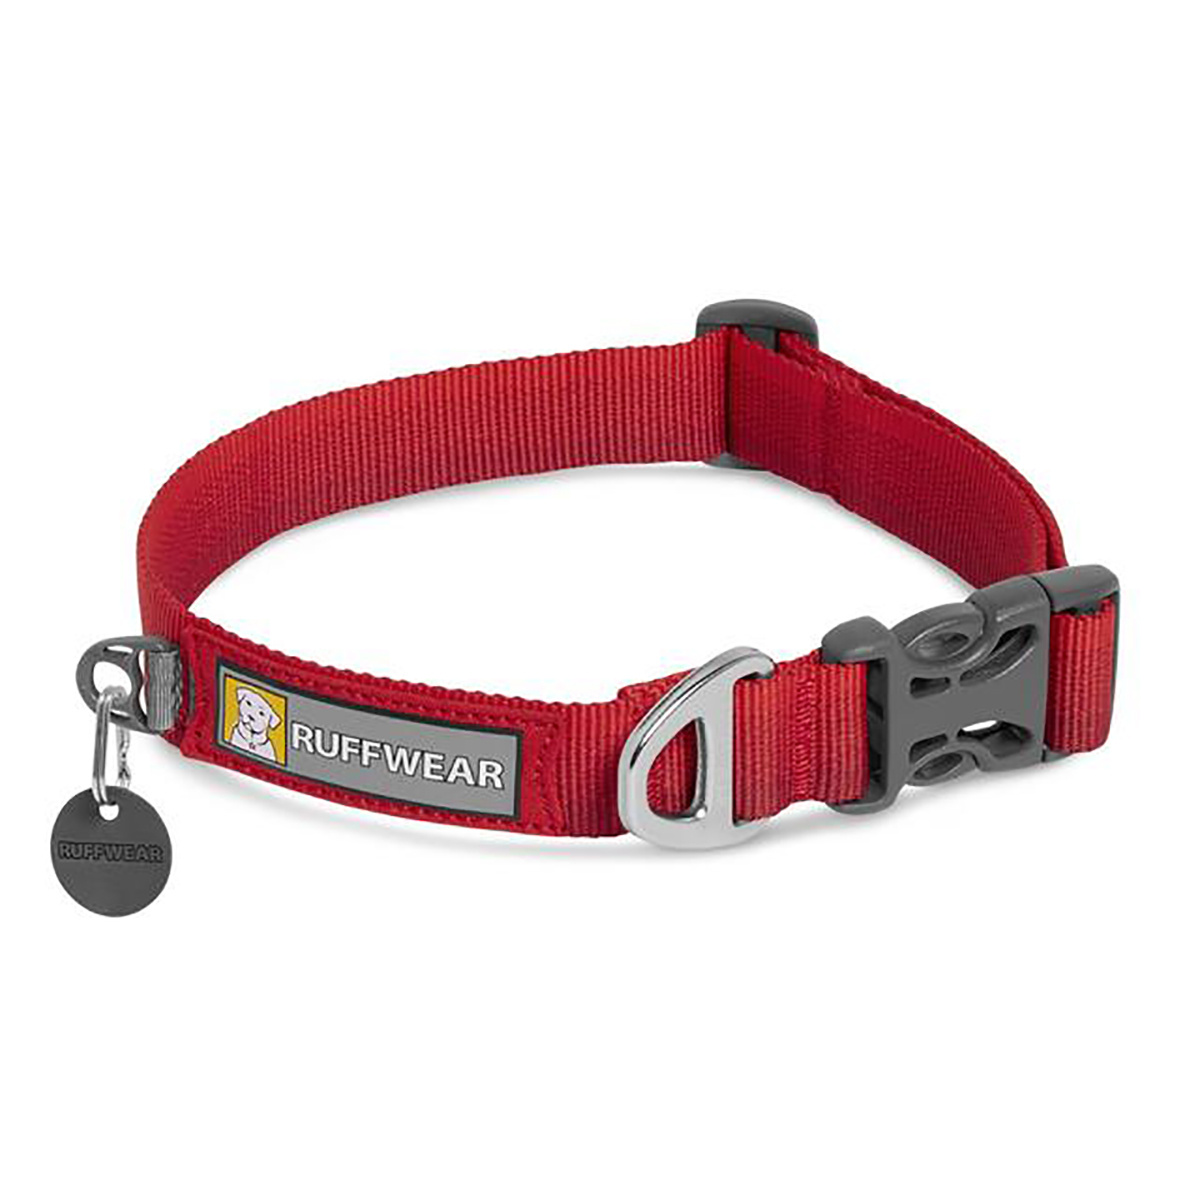 Ruffwear Front Range Collar Hundehalsband (Größe 36-51cm, red sumac)